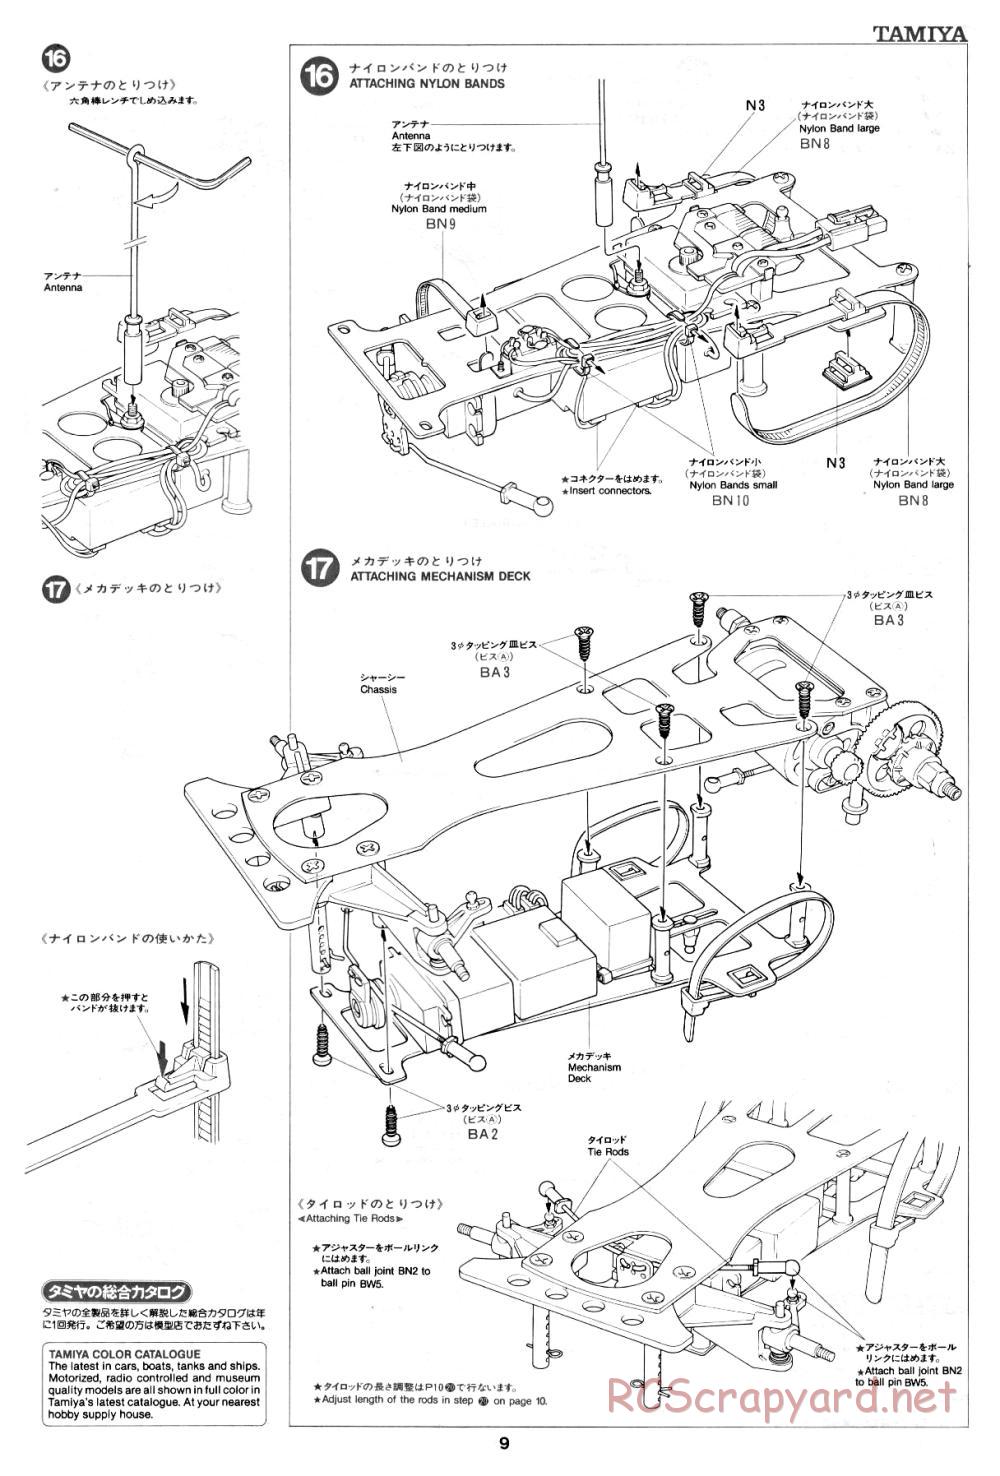 Tamiya - Toyota Tom's 84C - RM MK.6 - 58049 - Manual - Page 9